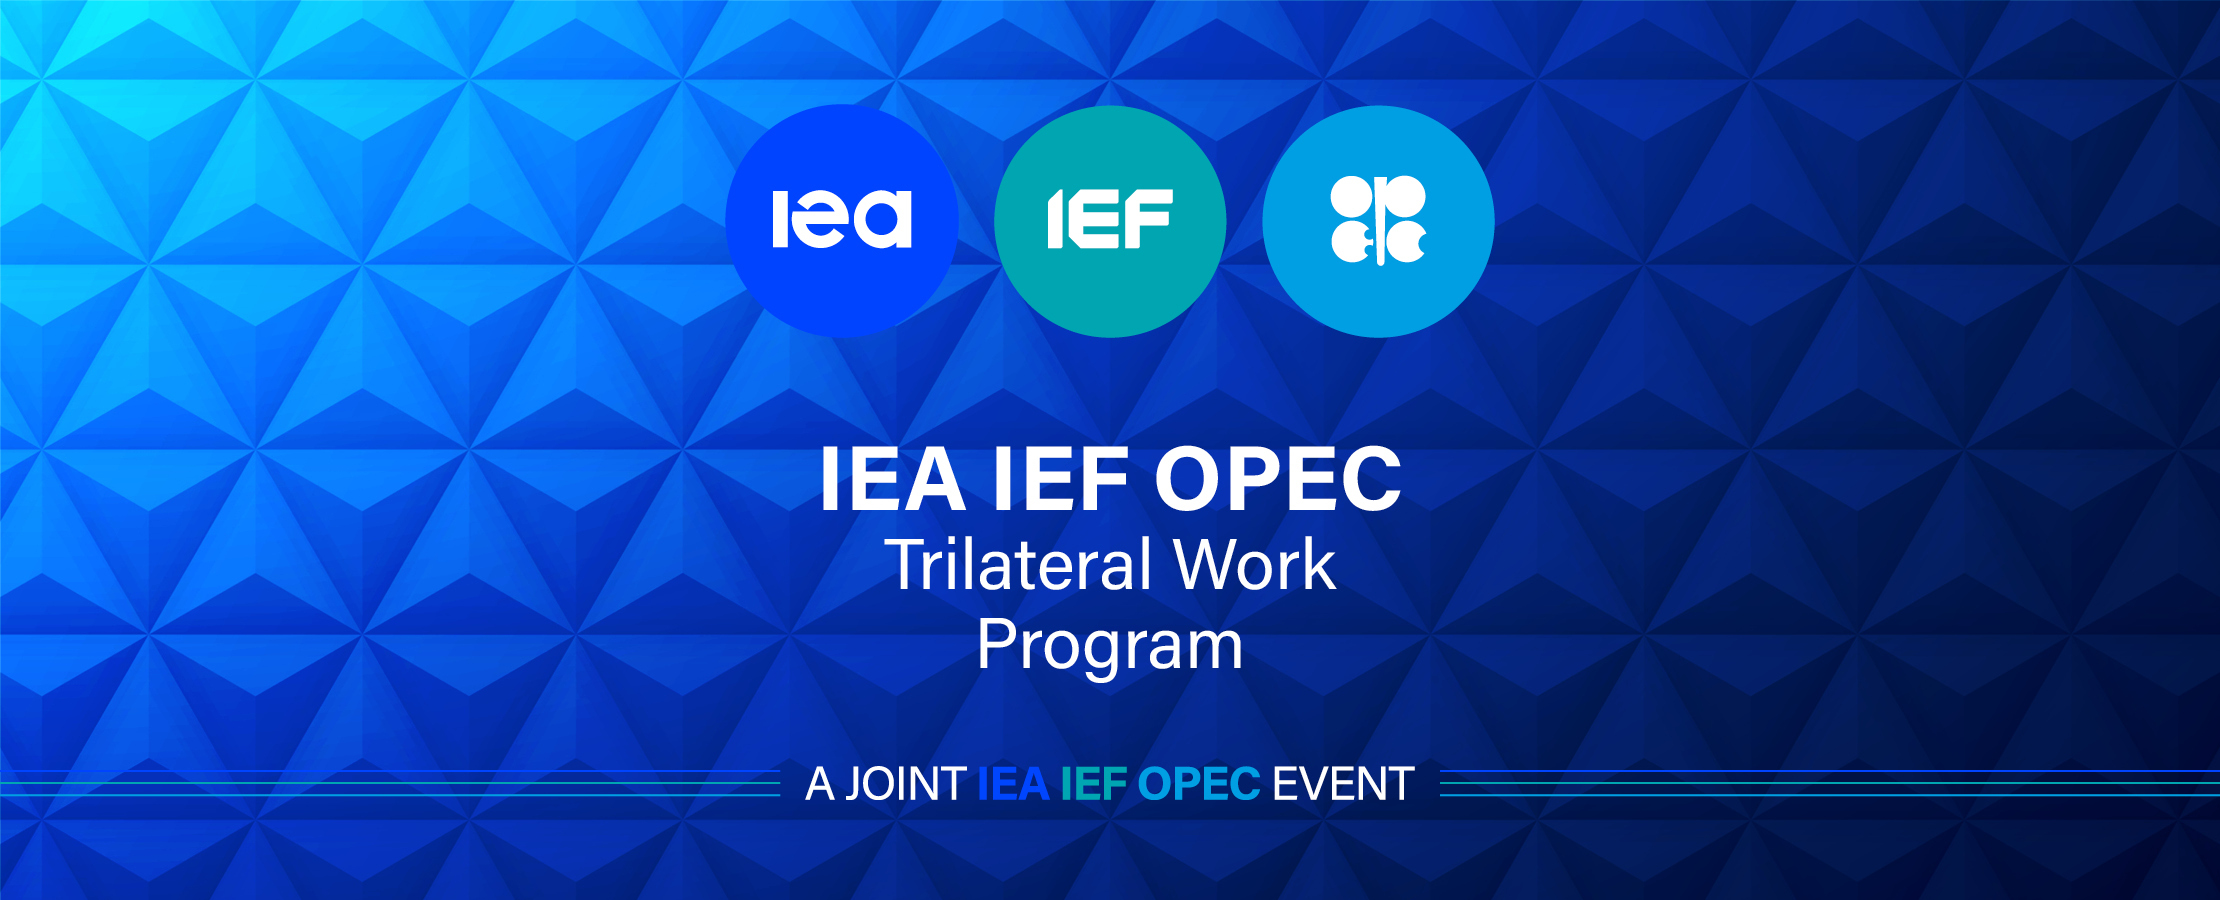 IEF Trilateral Work Program